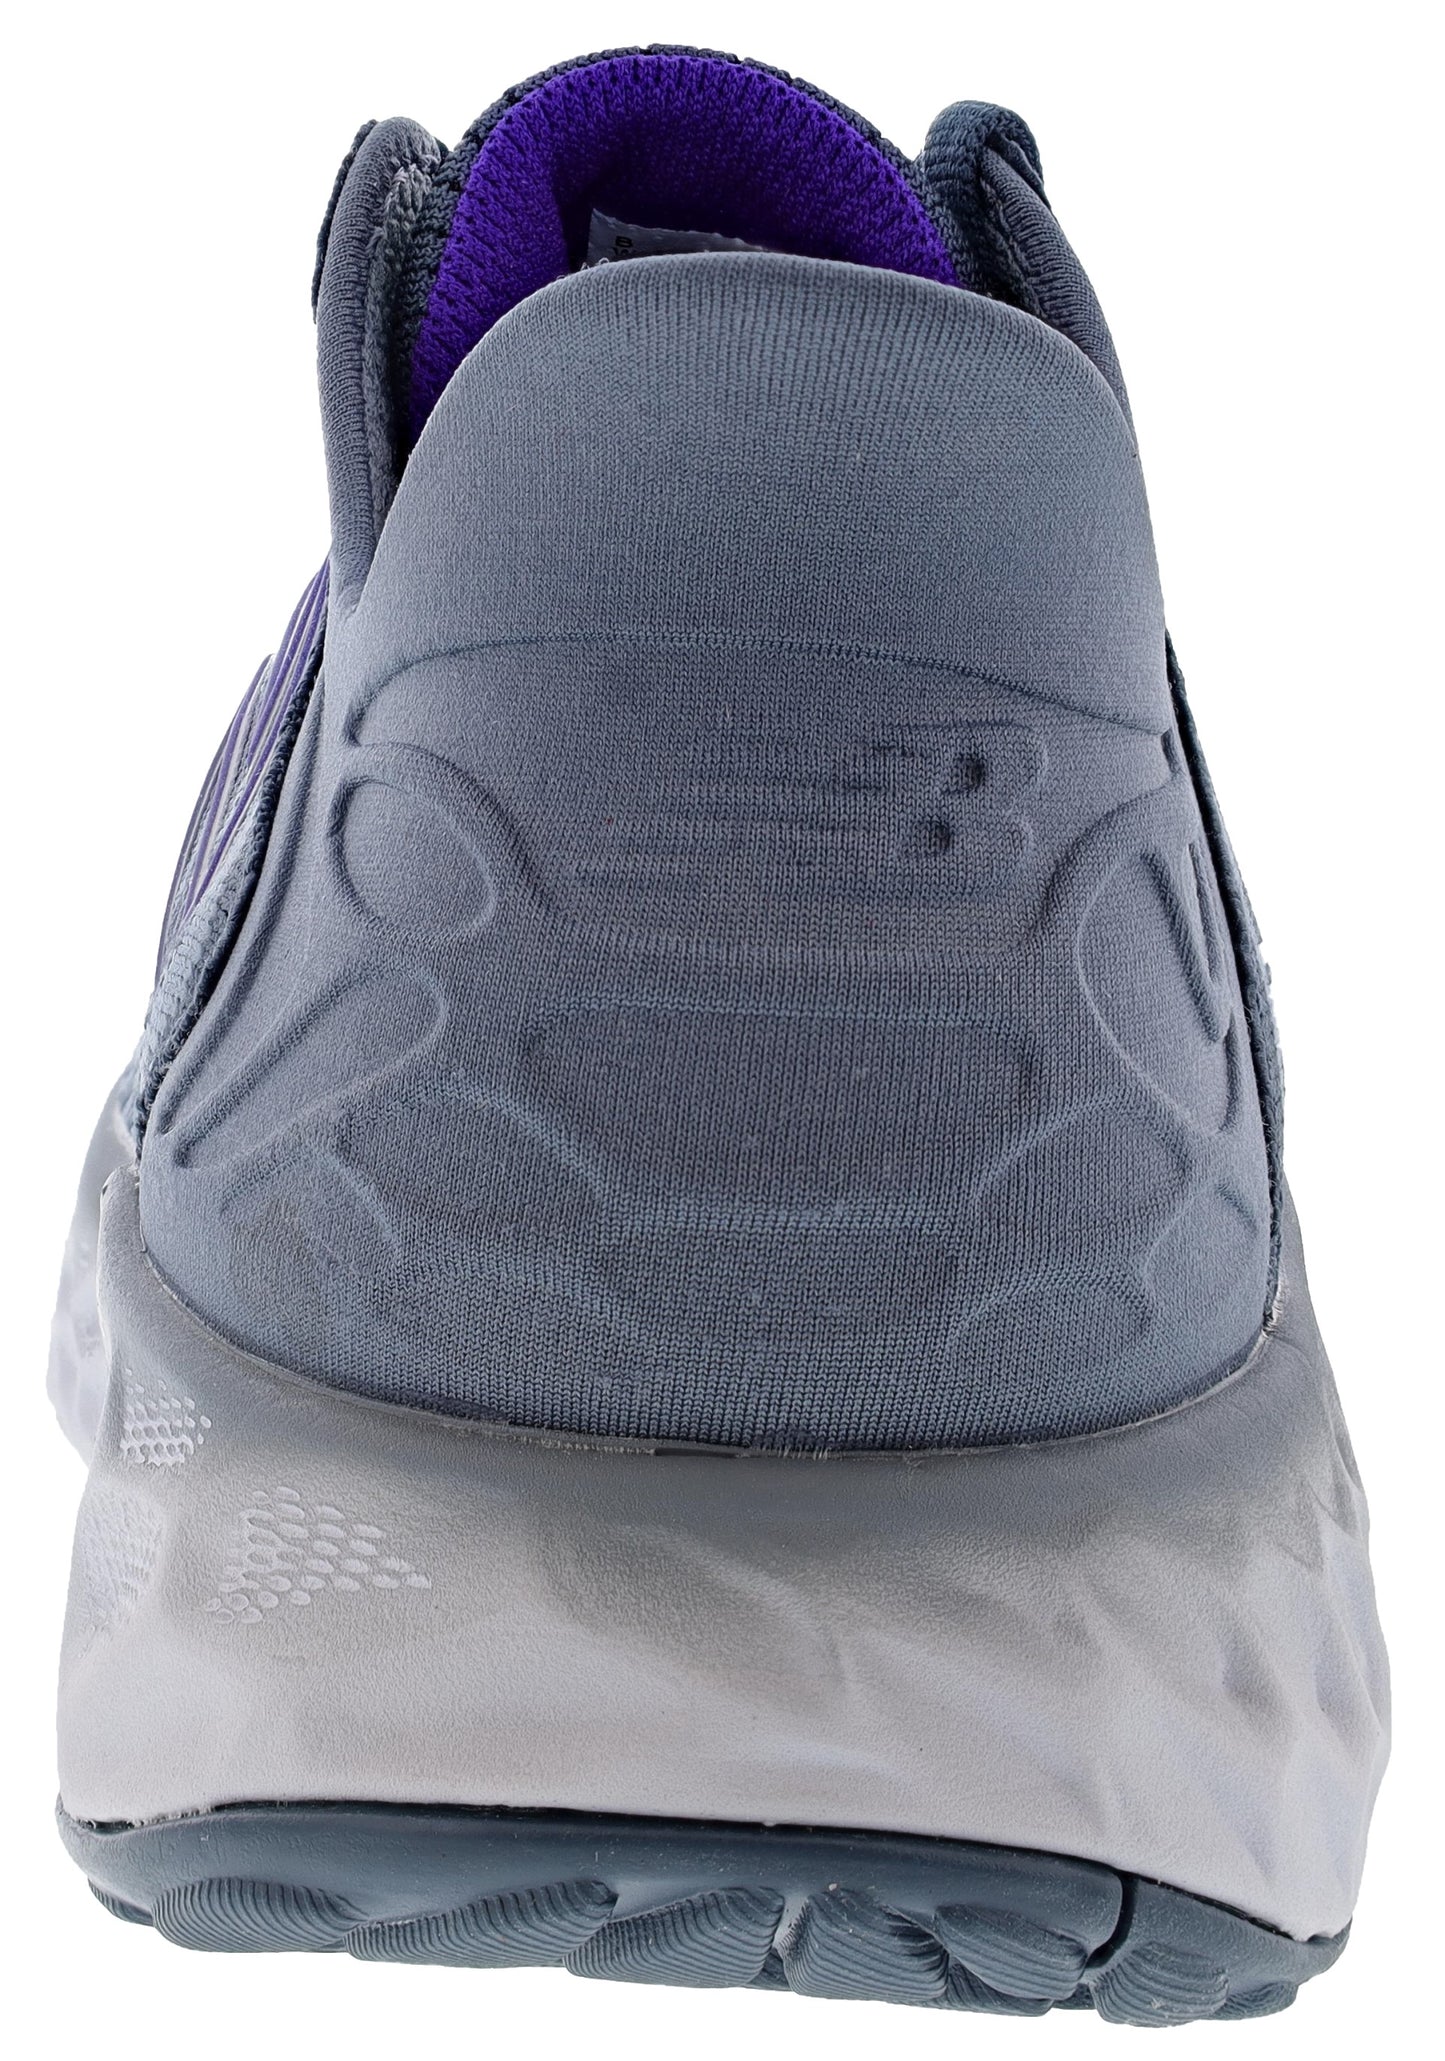 
                  
                    New Balance Women's Fresh Foam 1080 v11 Running Shoes
                  
                